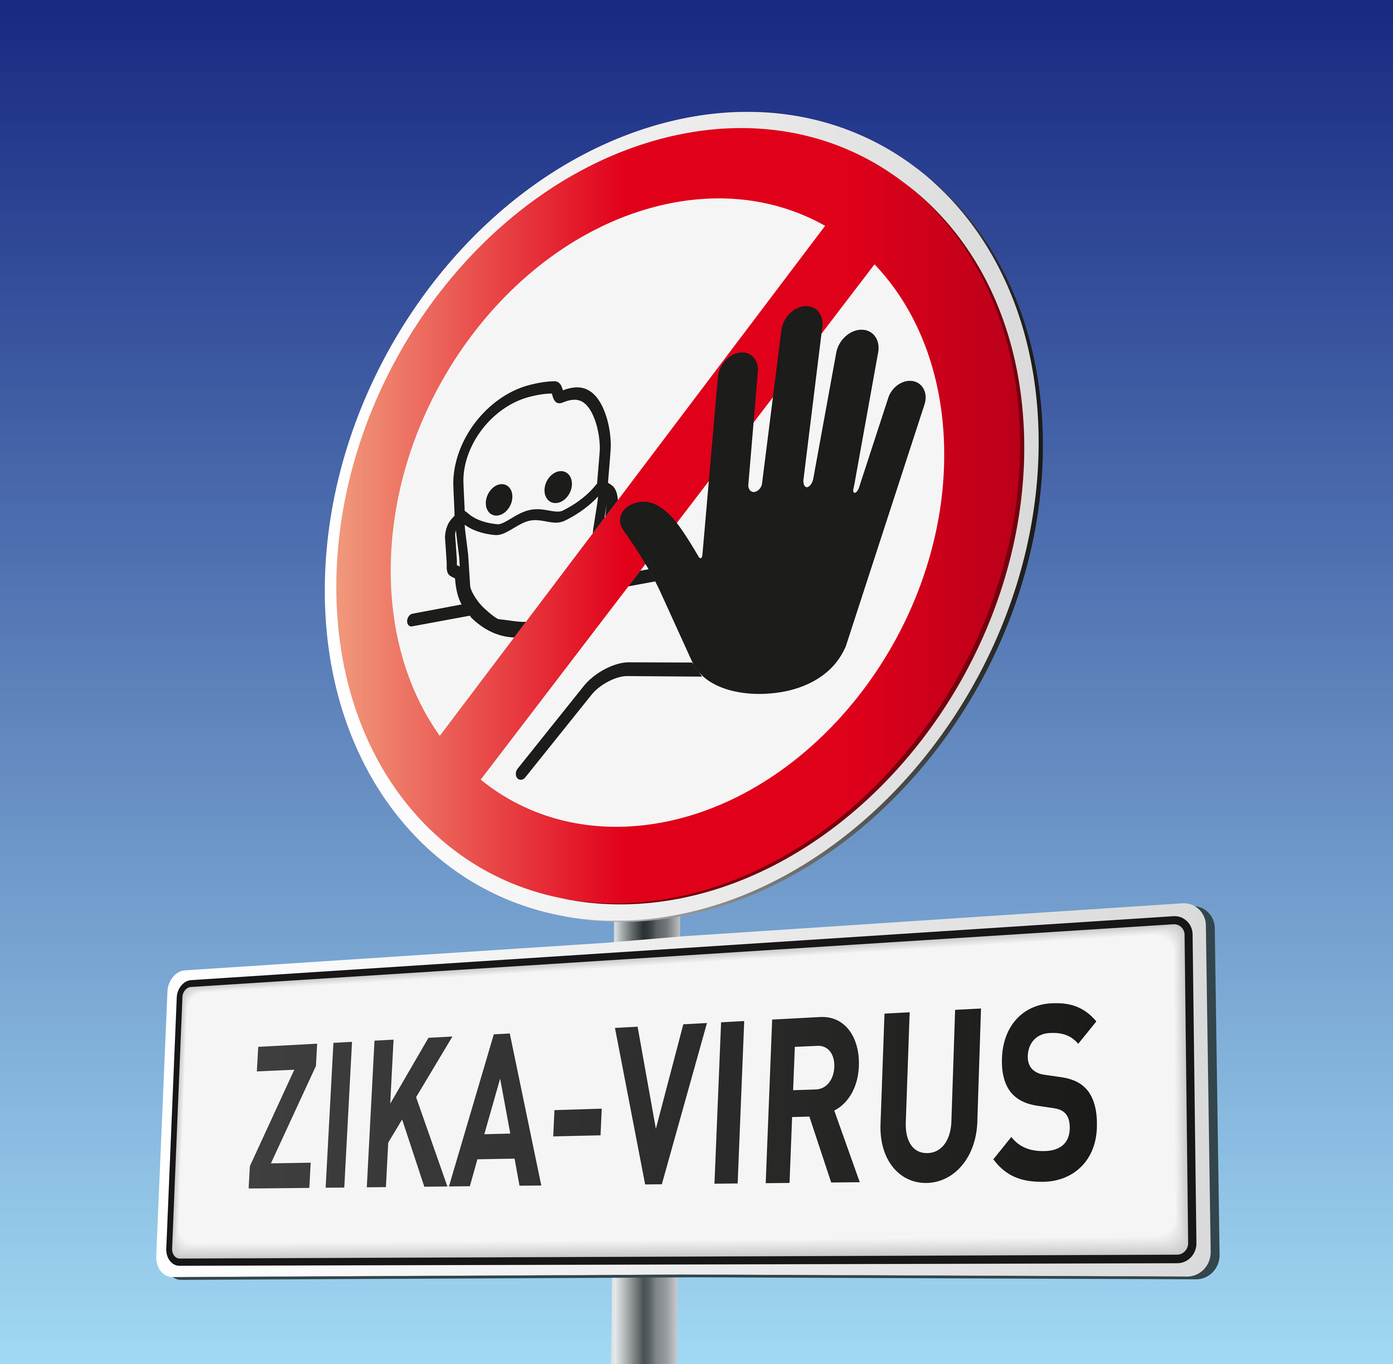 Virus zika pericolo